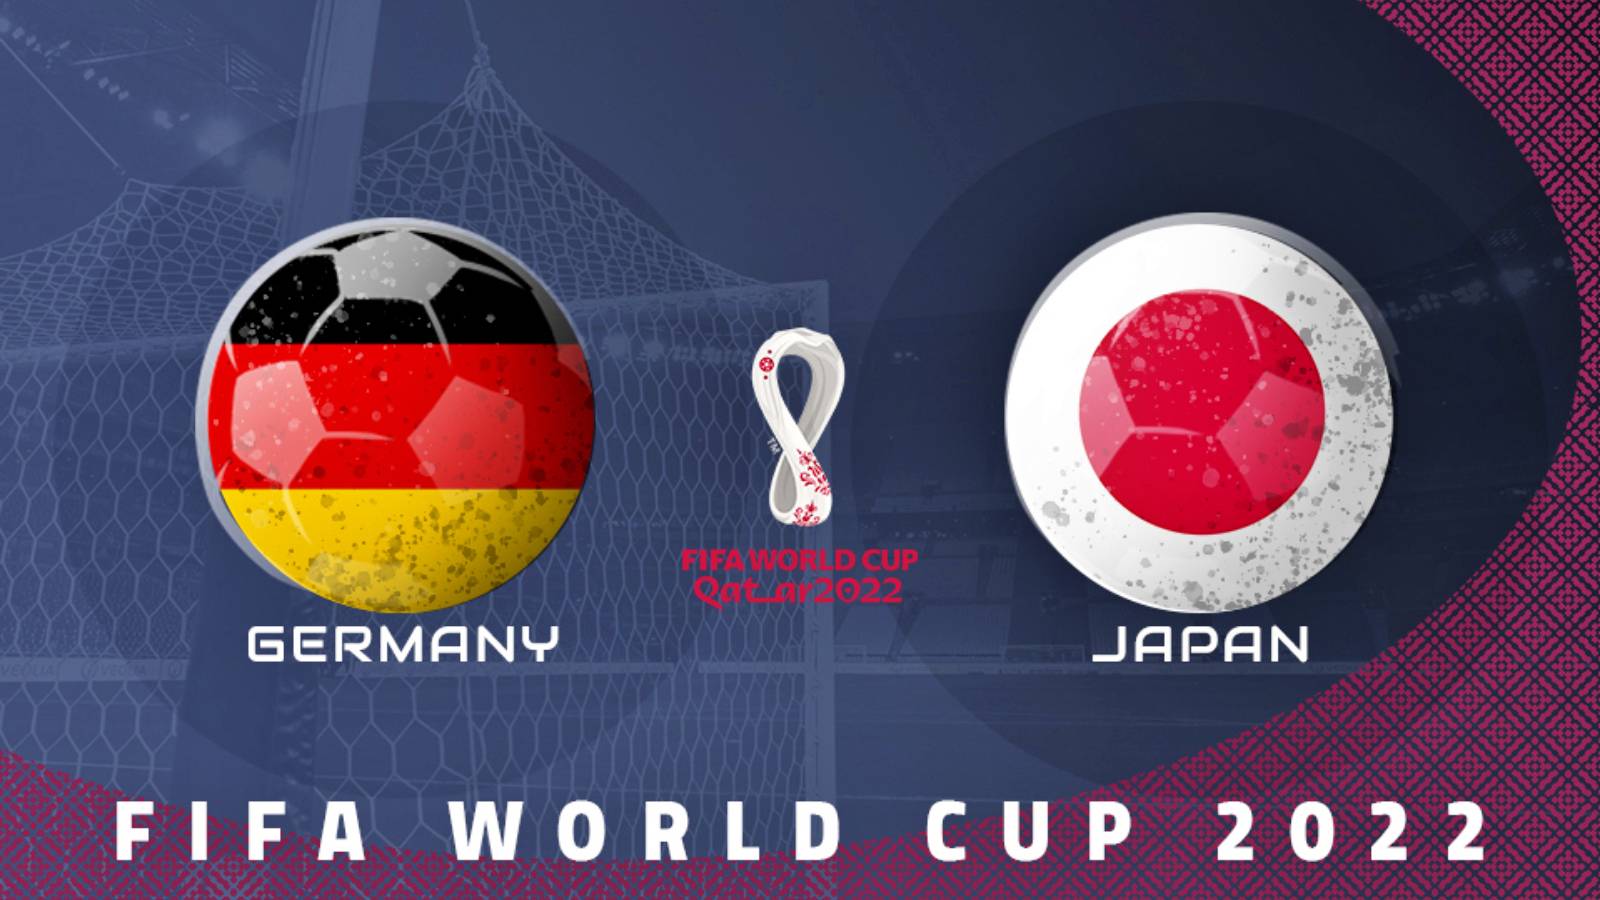 GERMANY – JAPAN TVR 1 LIVE MATCH FOOTBALL WORLD CHAMPIONSHIP 2022 QATAR